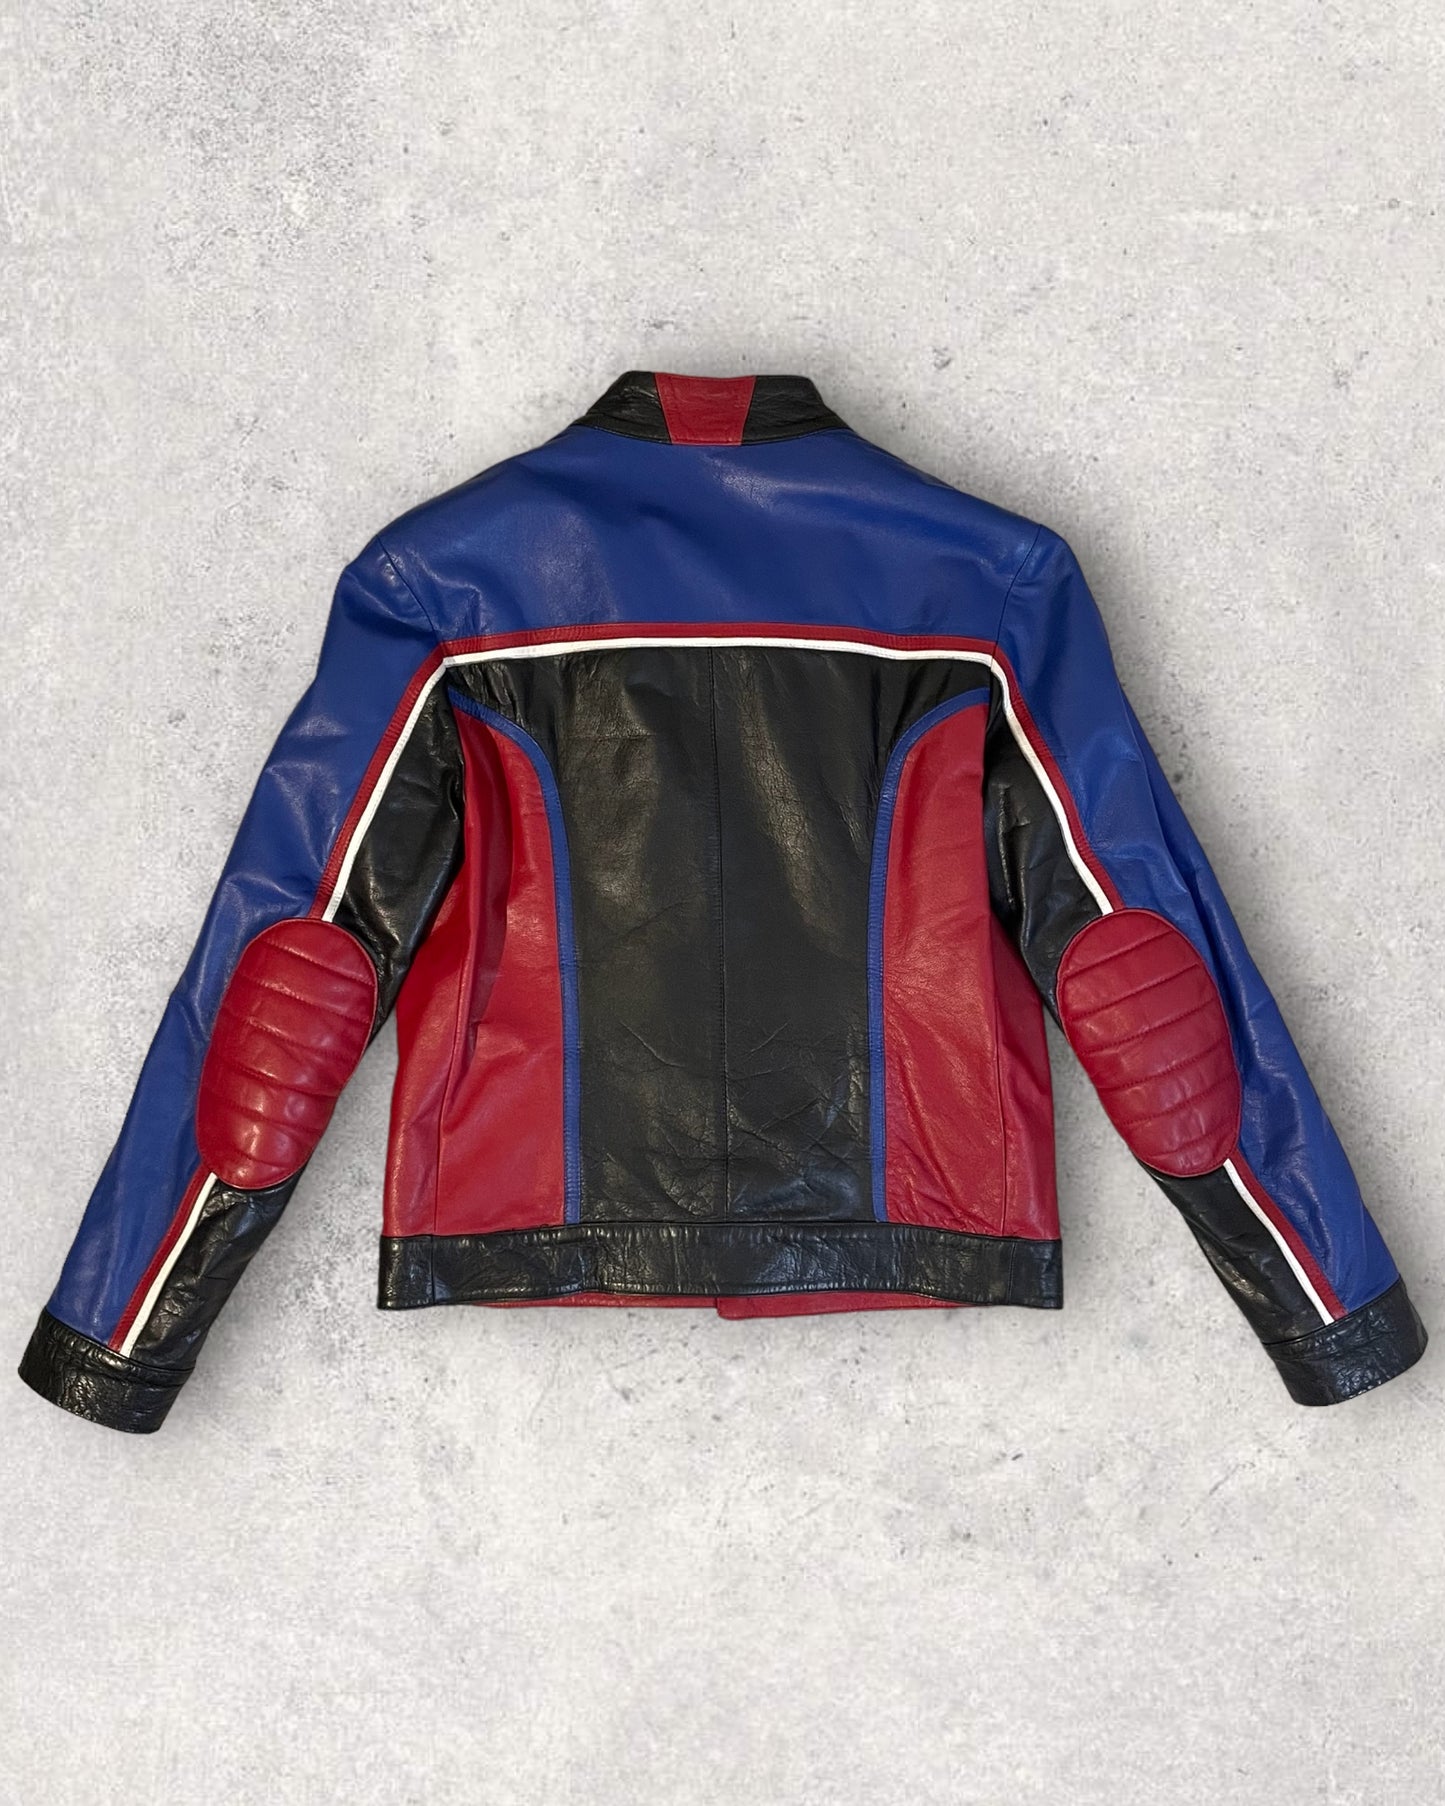 AW98 Dolce & Gabbana Cafe Racer Leather Jacket (M)